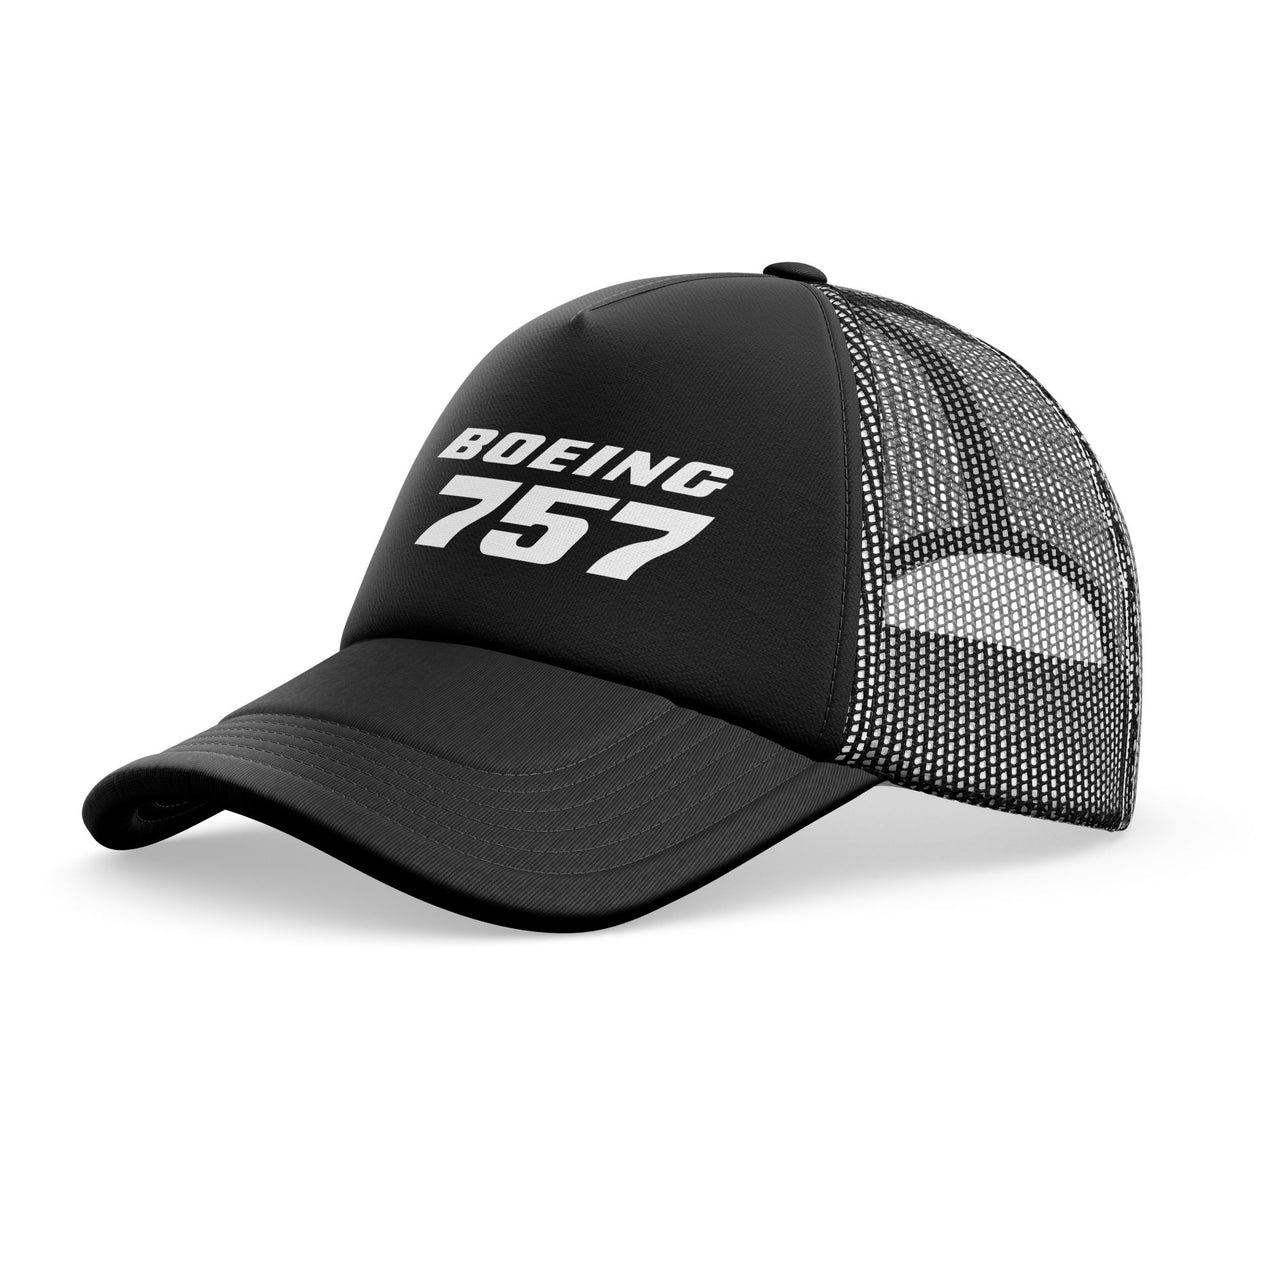 Boeing 757 & Text Designed Trucker Caps & Hats